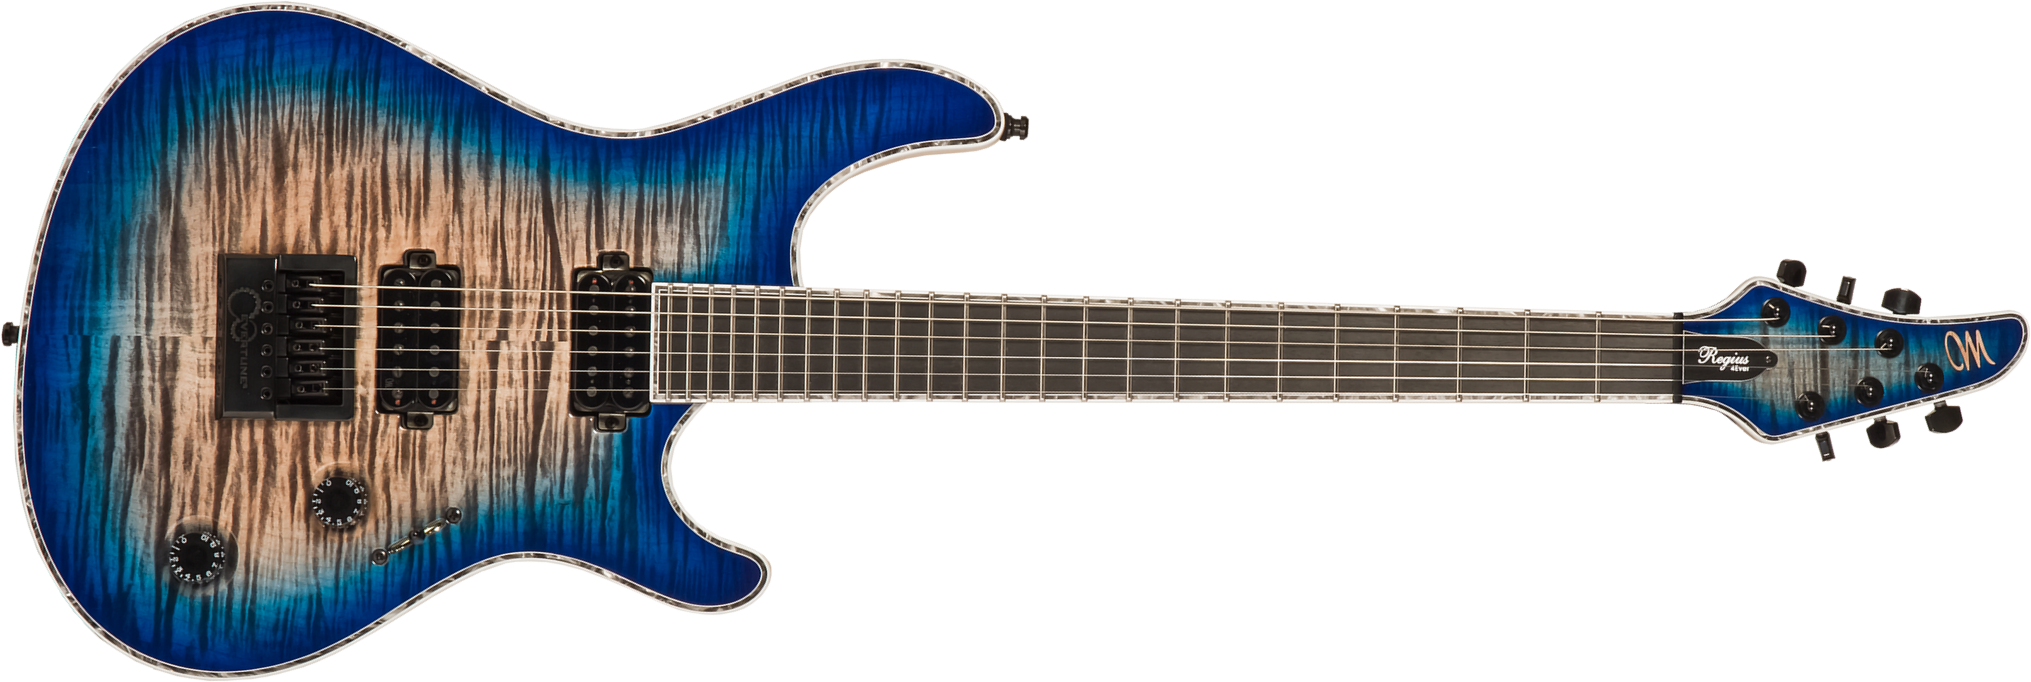 Mayones Guitars Regius 4ever 6 2h Ht Eb #rp2309275 - Jeans Black 3-tone Blue Burst Gloss - Metalen elektrische gitaar - Main picture